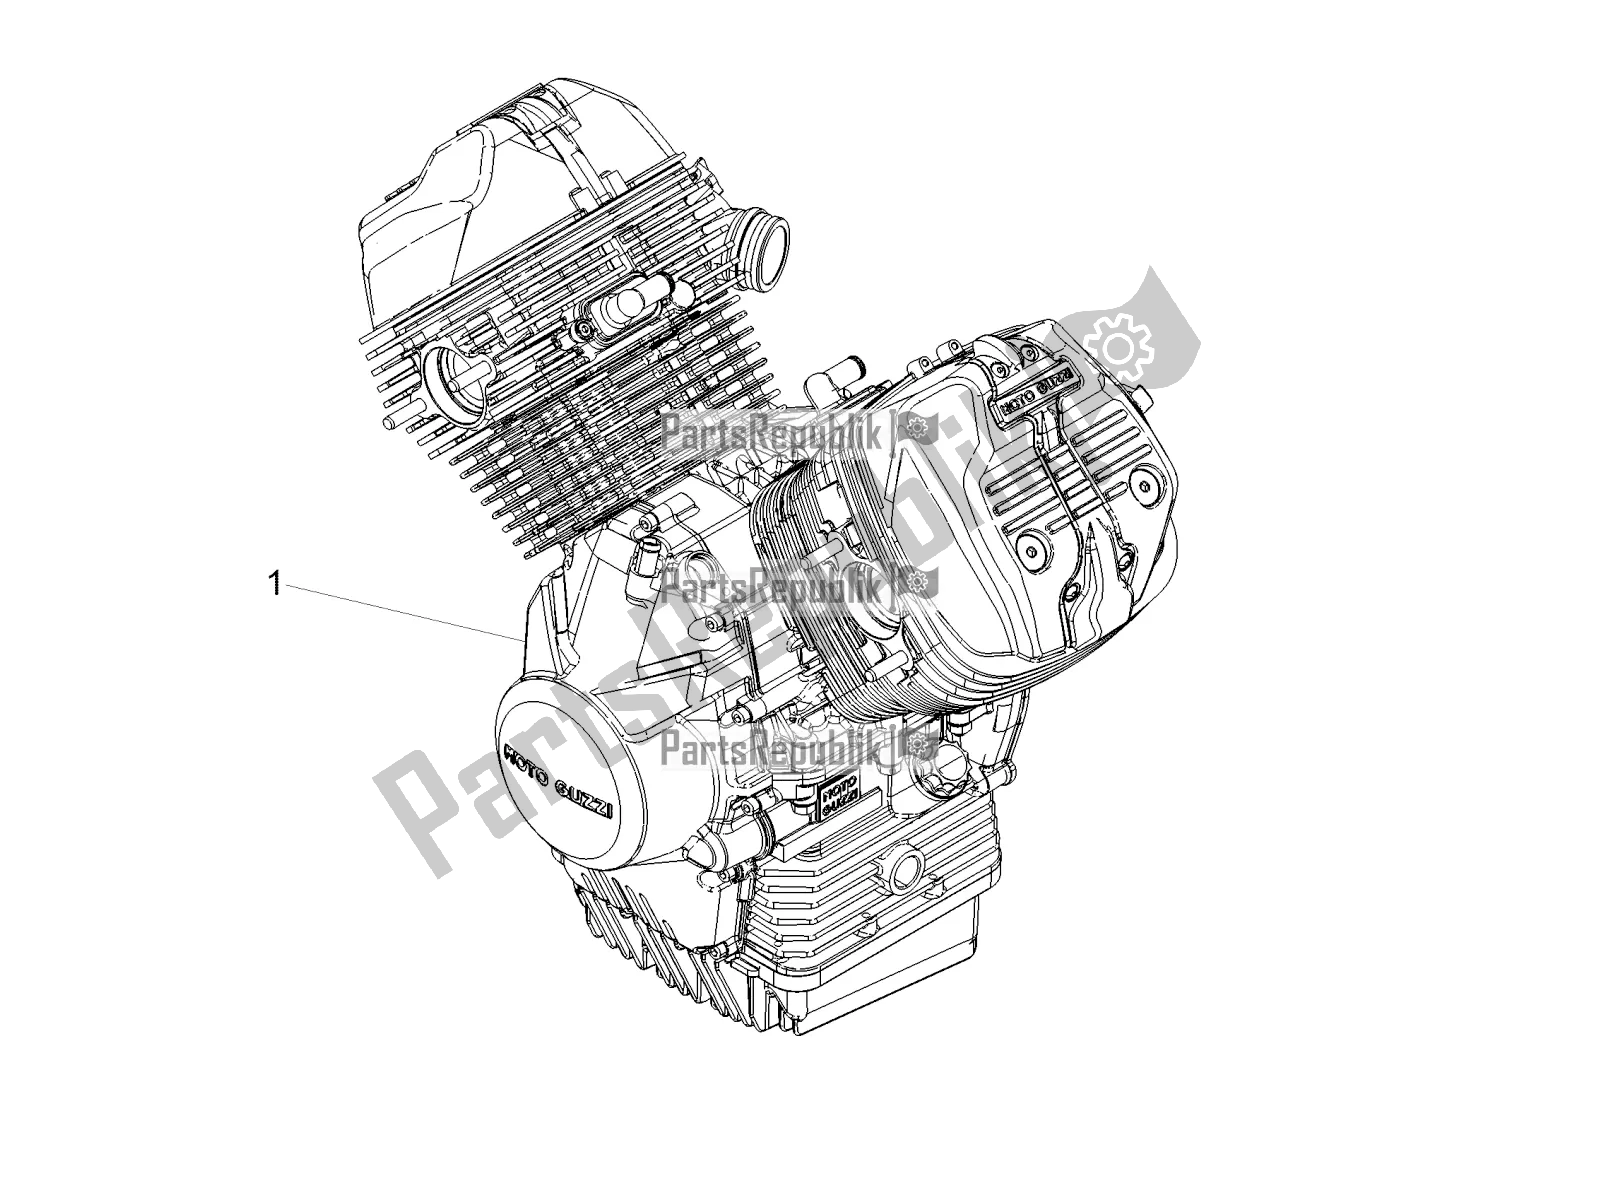 Todas las partes para Palanca Parcial Completa Del Motor de Moto-Guzzi V7 III Racer 750 E4 ABS 2017-2018-2019 Nafta 2019